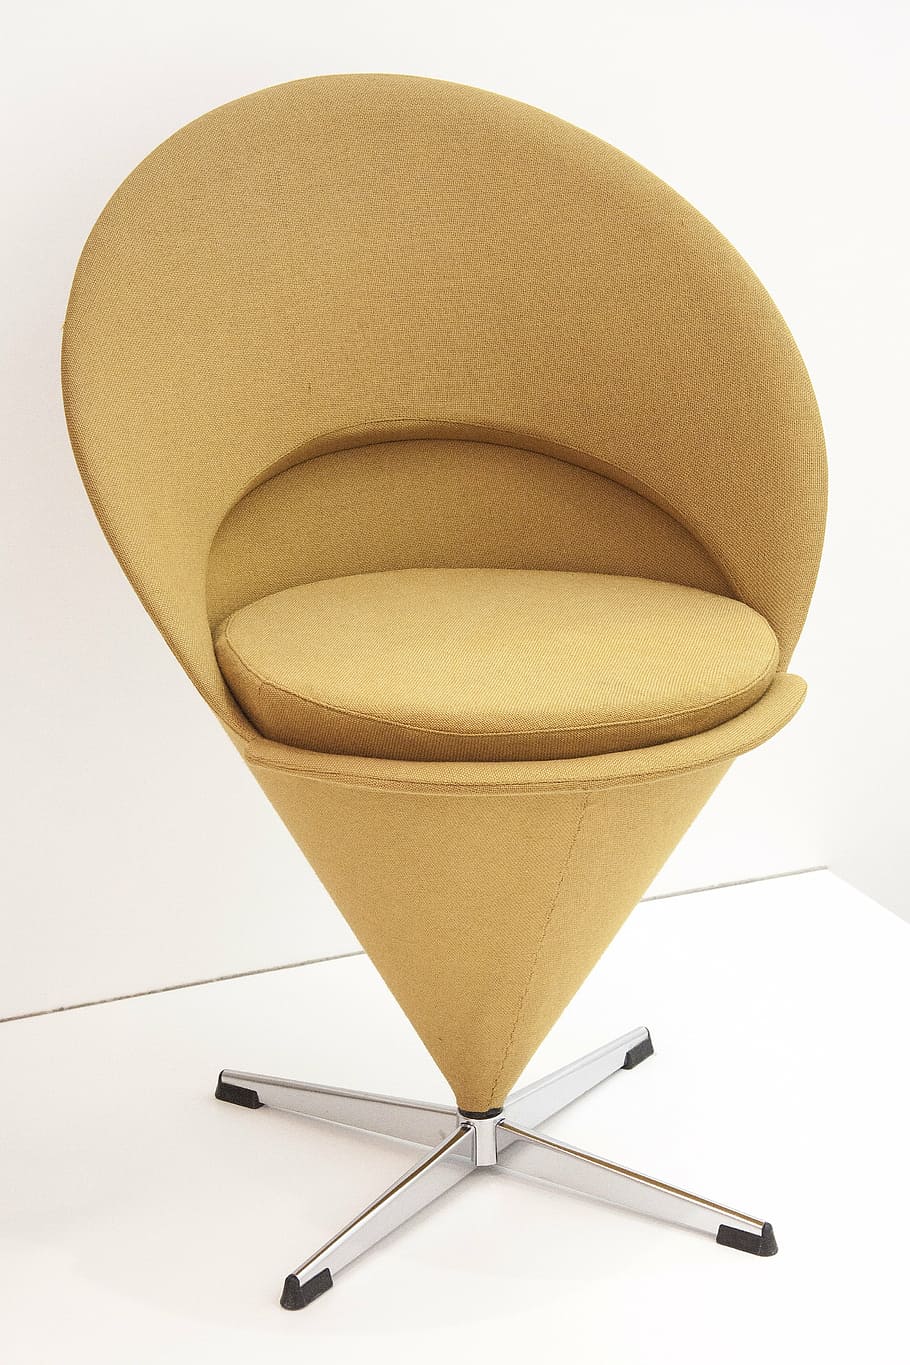 yellow, fabric chair, white, surface, chair, ice cream cone, verner panton, copenhagen, 1958, design